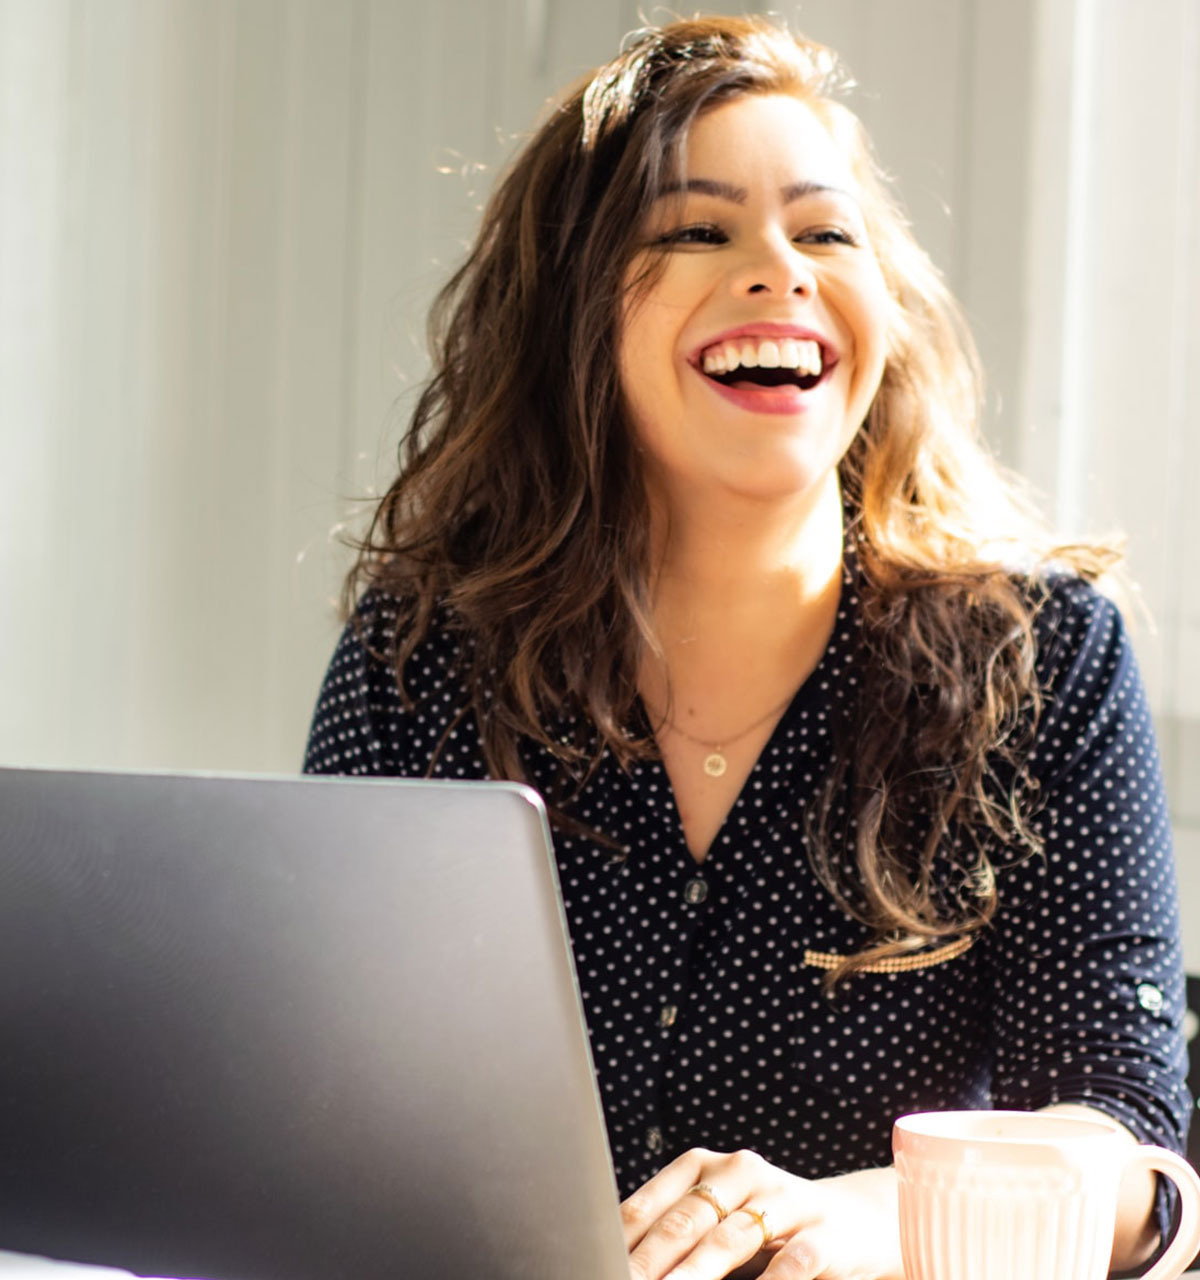 Smiling Woman on laptop